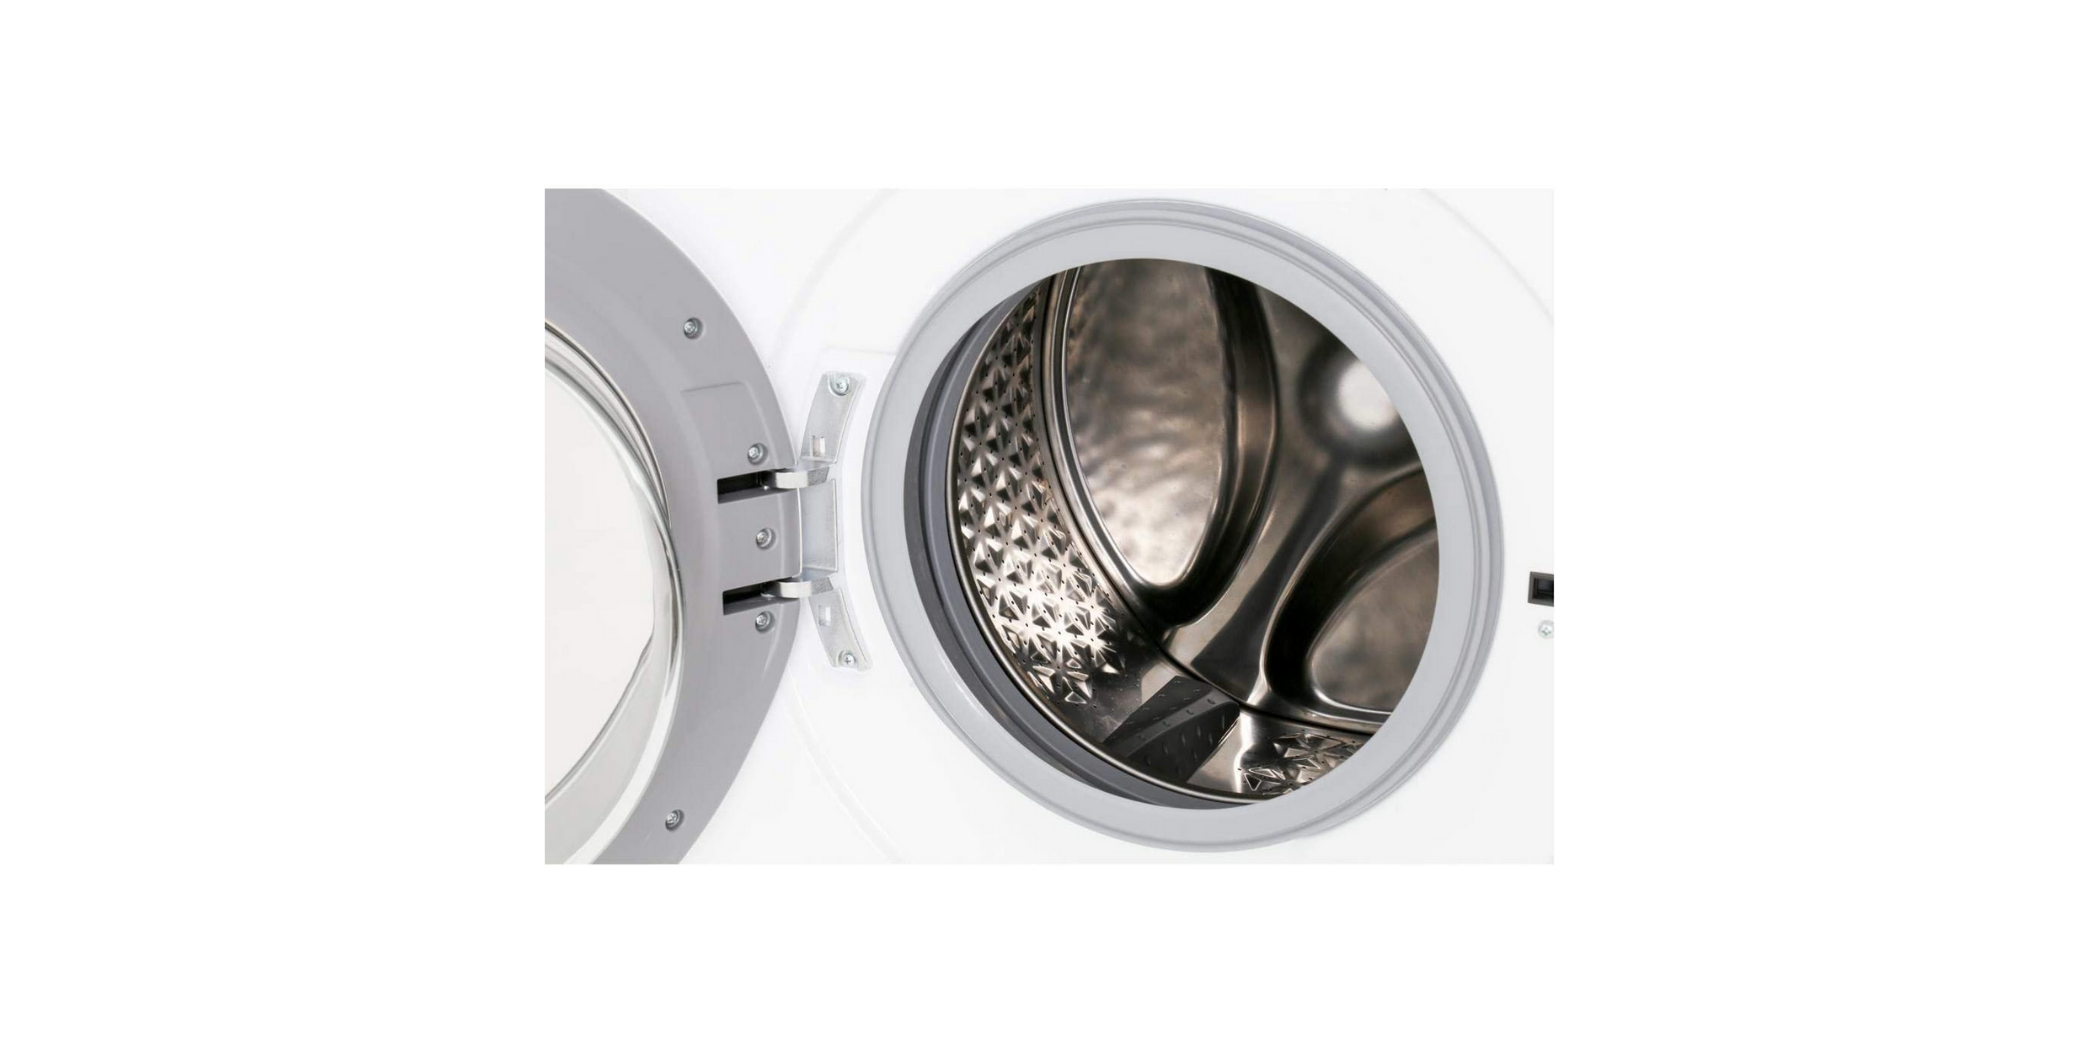 Hisense WFHV9014S Washing Machine